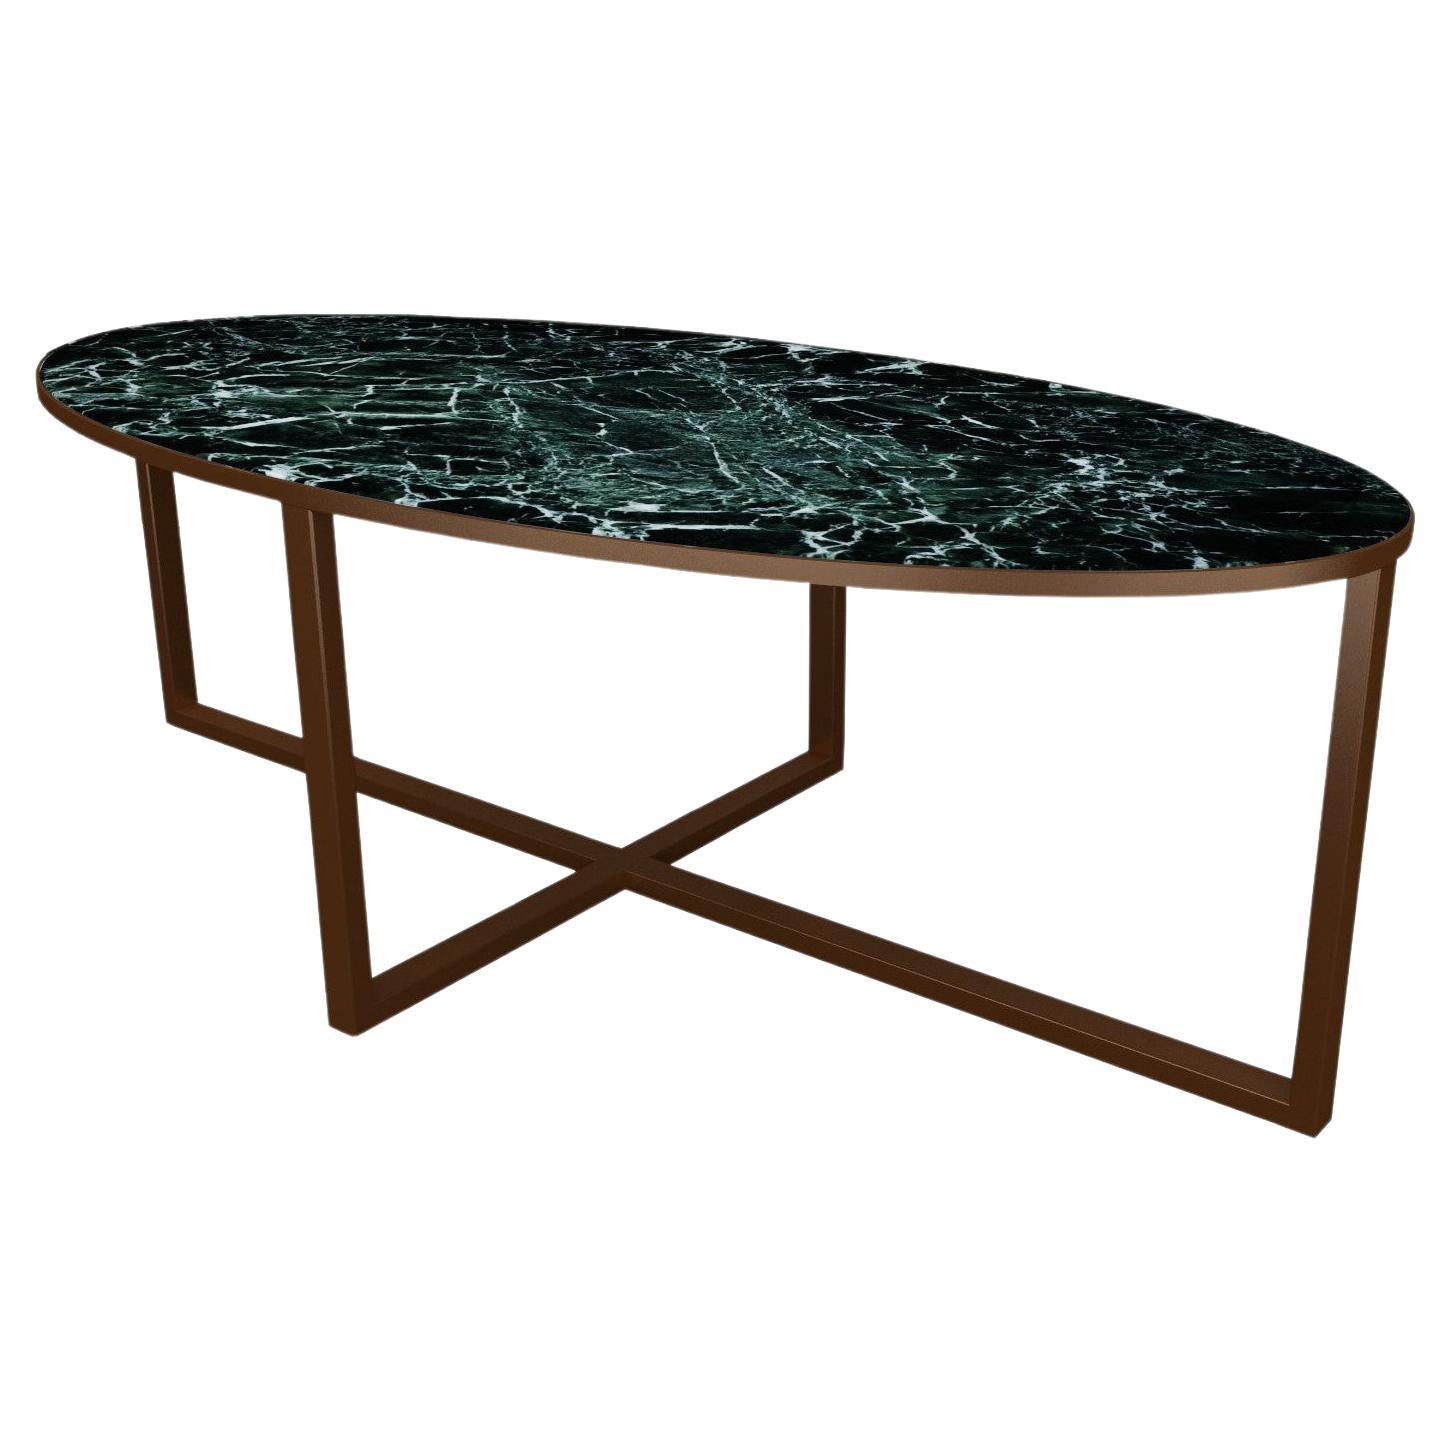 NORDST MIA Coffee Table, Italian Green Lightning Marble, Danish Modern Design For Sale